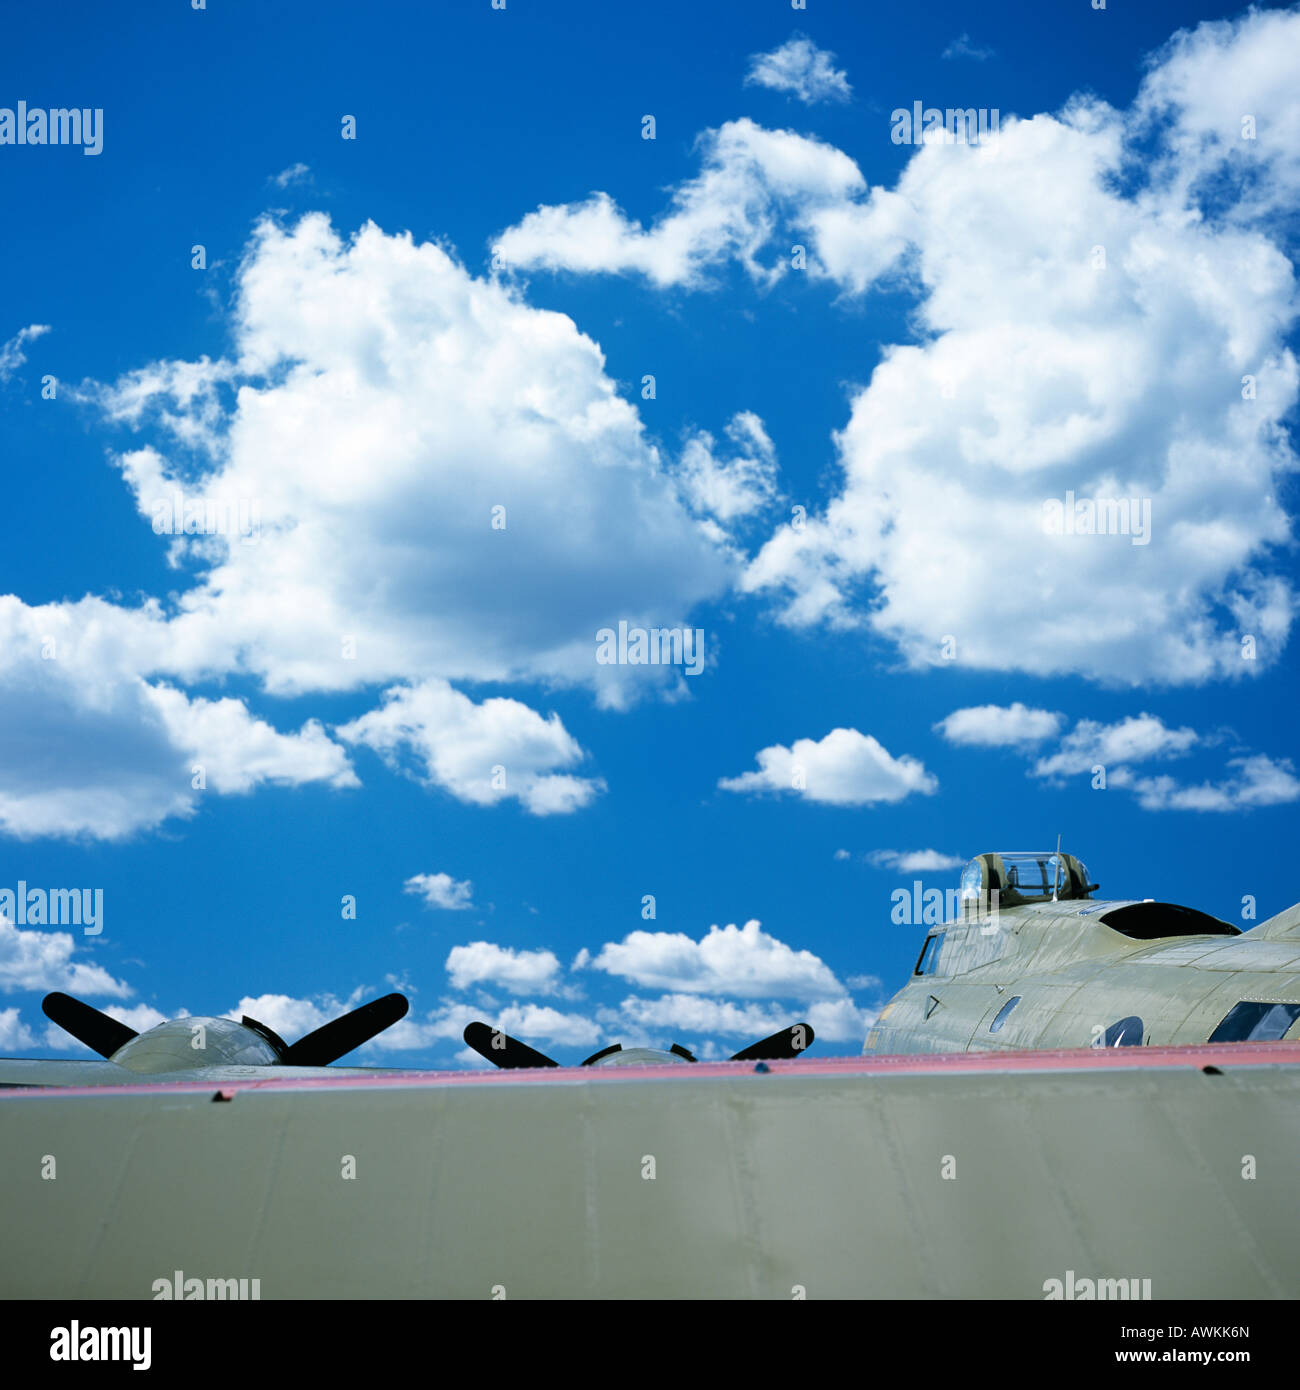 B17 Flying Fortress Dans le cadre bleu, ciel rempli de nuages. Banque D'Images